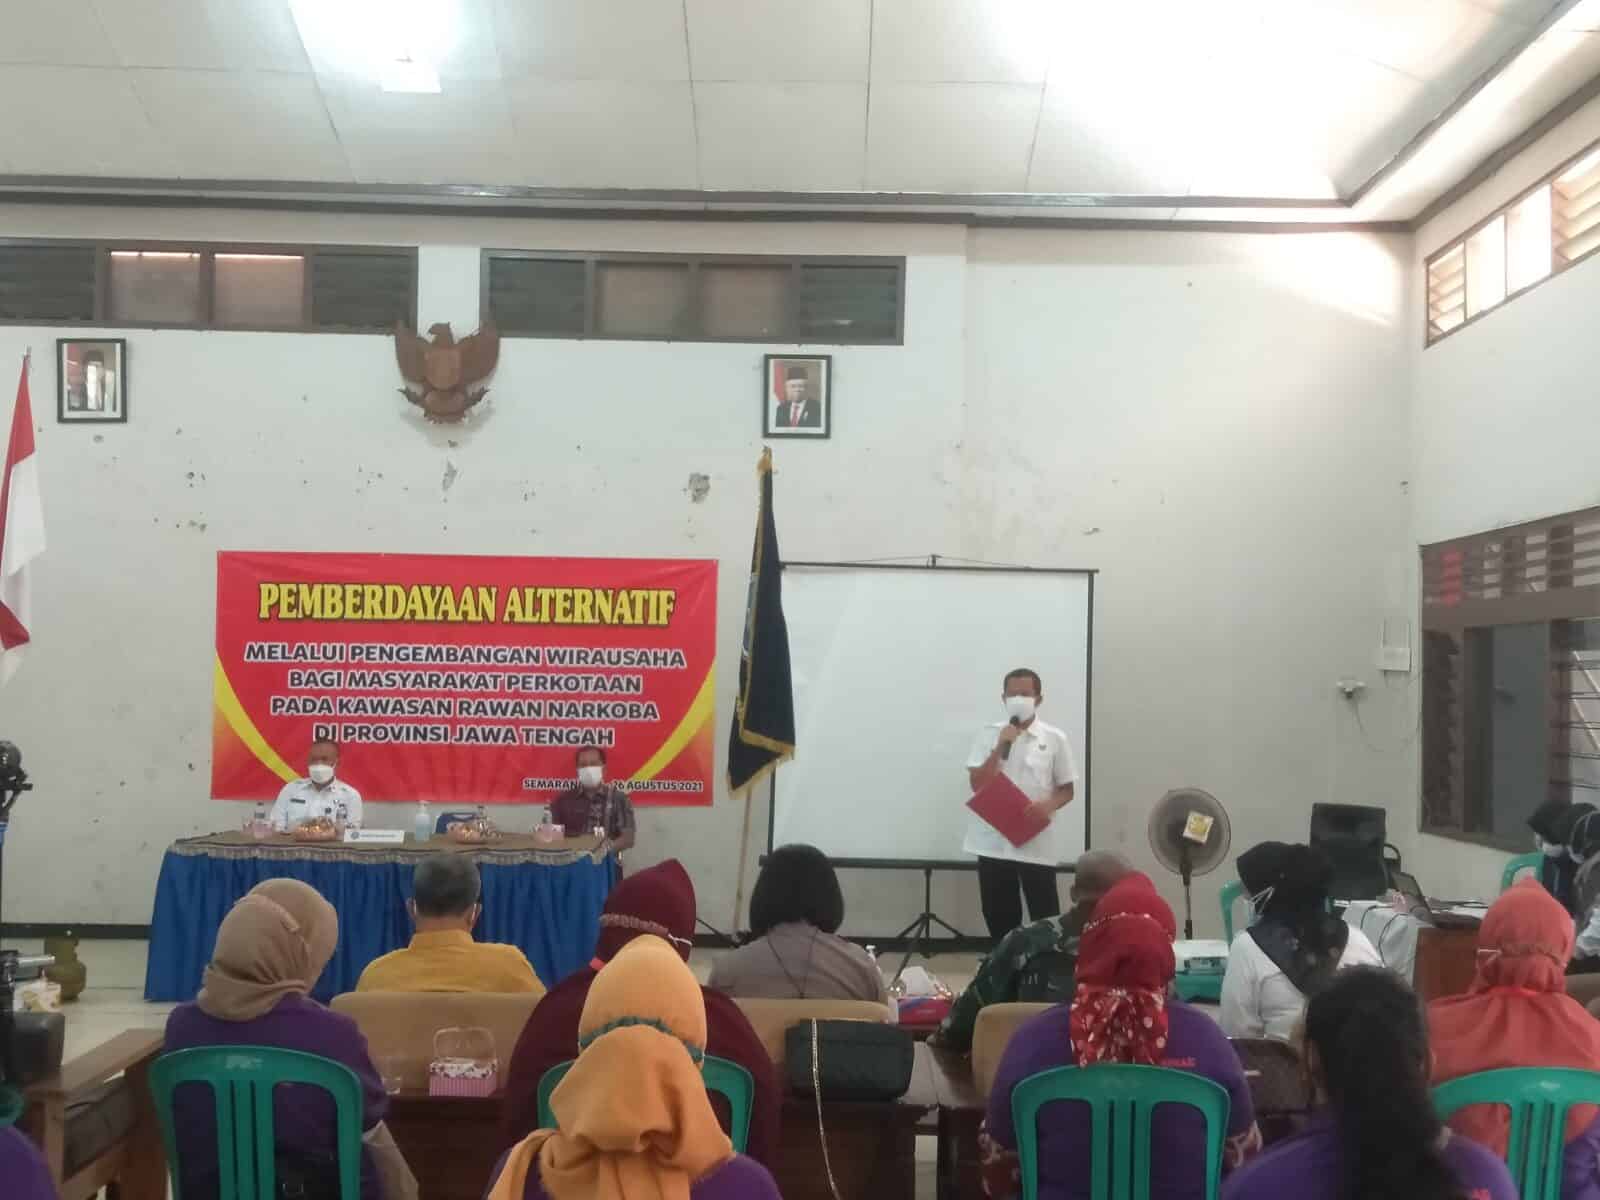 Pemberdayaan Alternatif melalui Pengembangan Wirausaha bagi Masyarakat Perkotaan Rawan Narkoba di Provinsi Jawa tengah